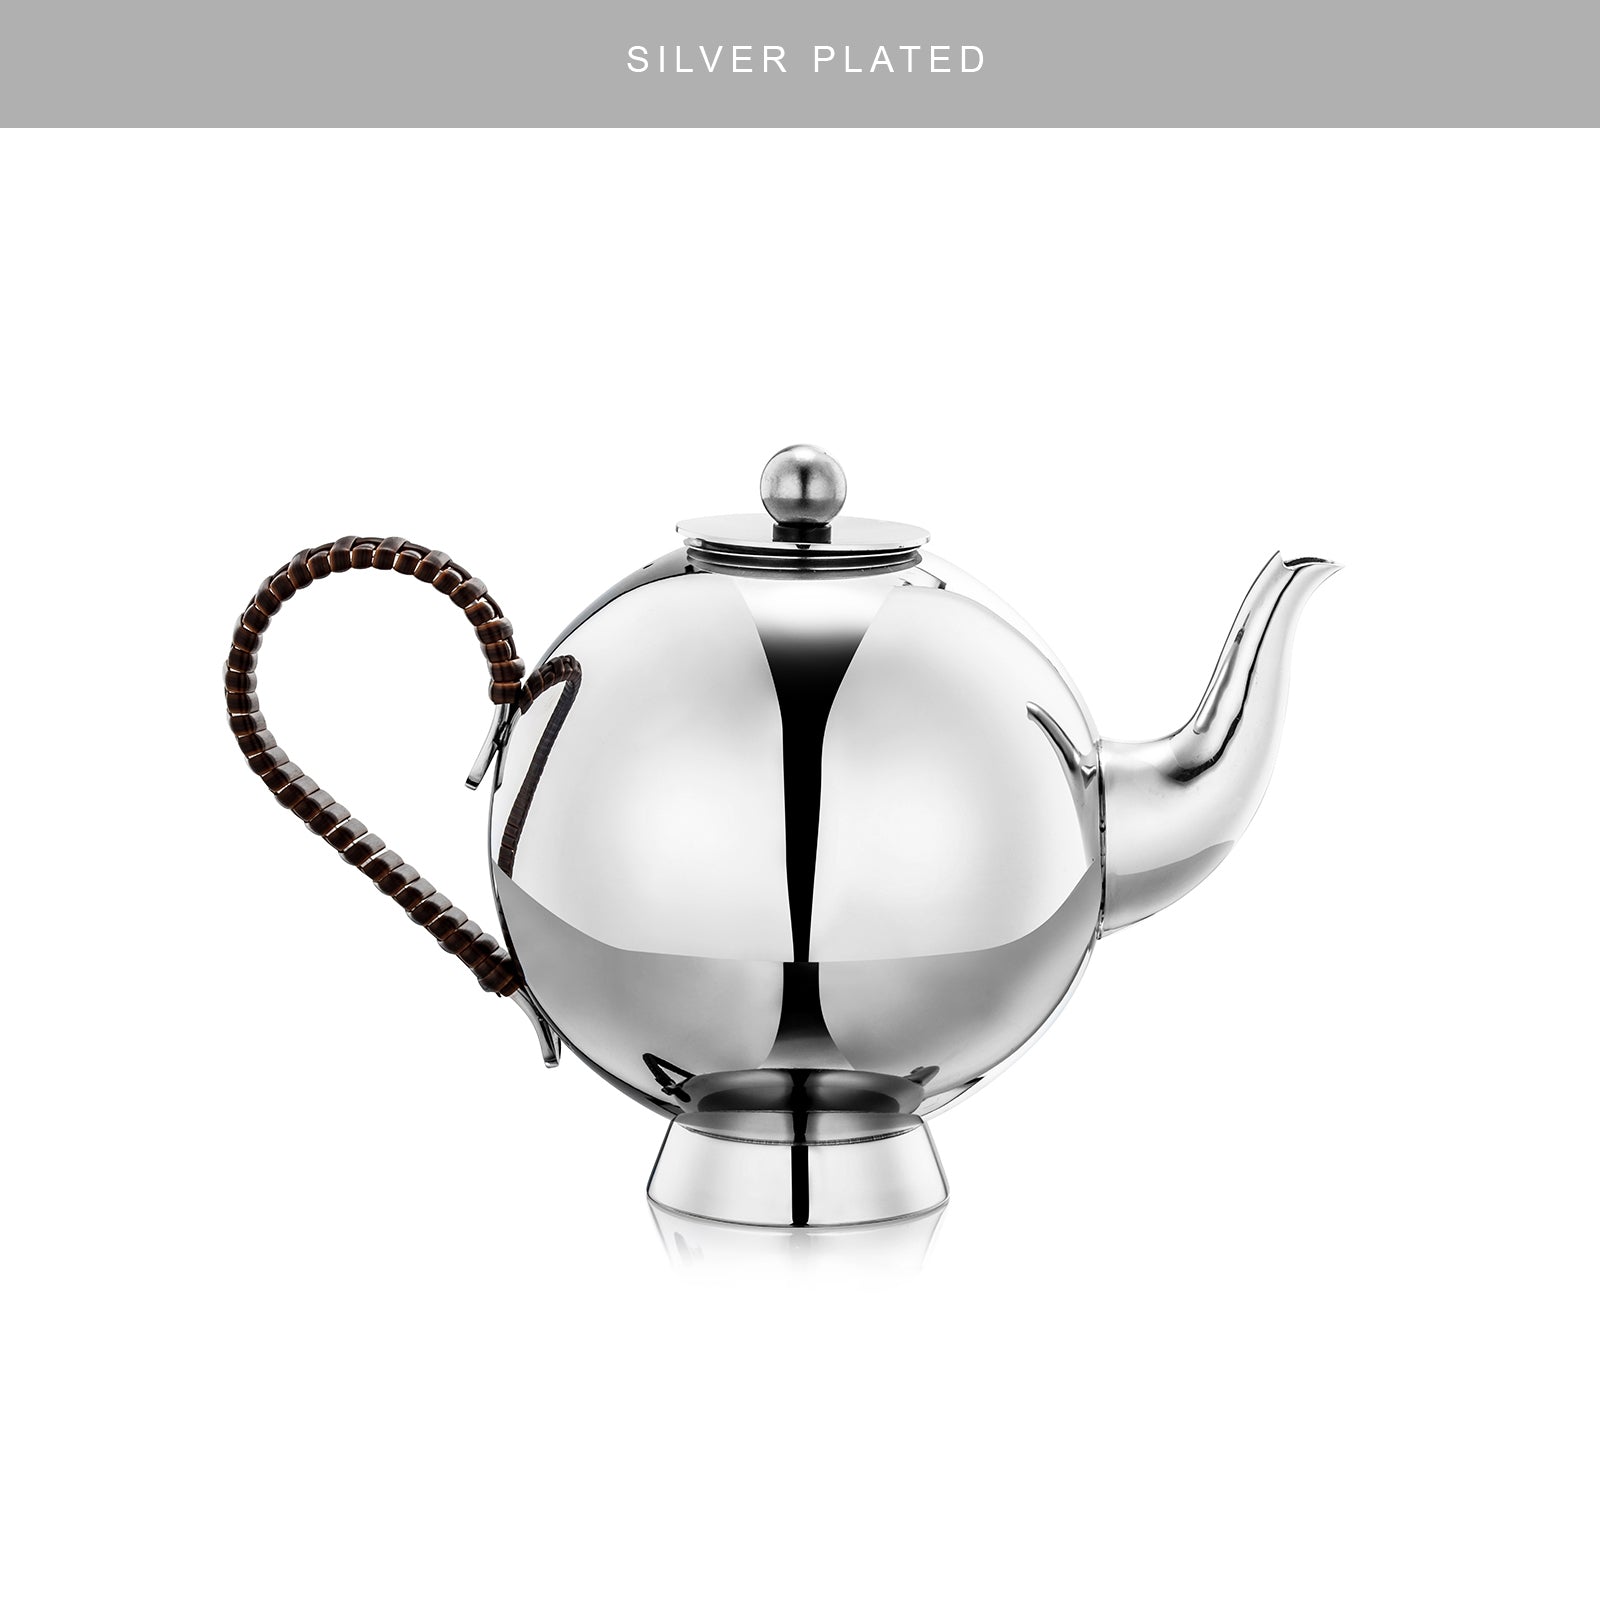 Silver Plated Spheres Tea Infuser Large Wicker Handle